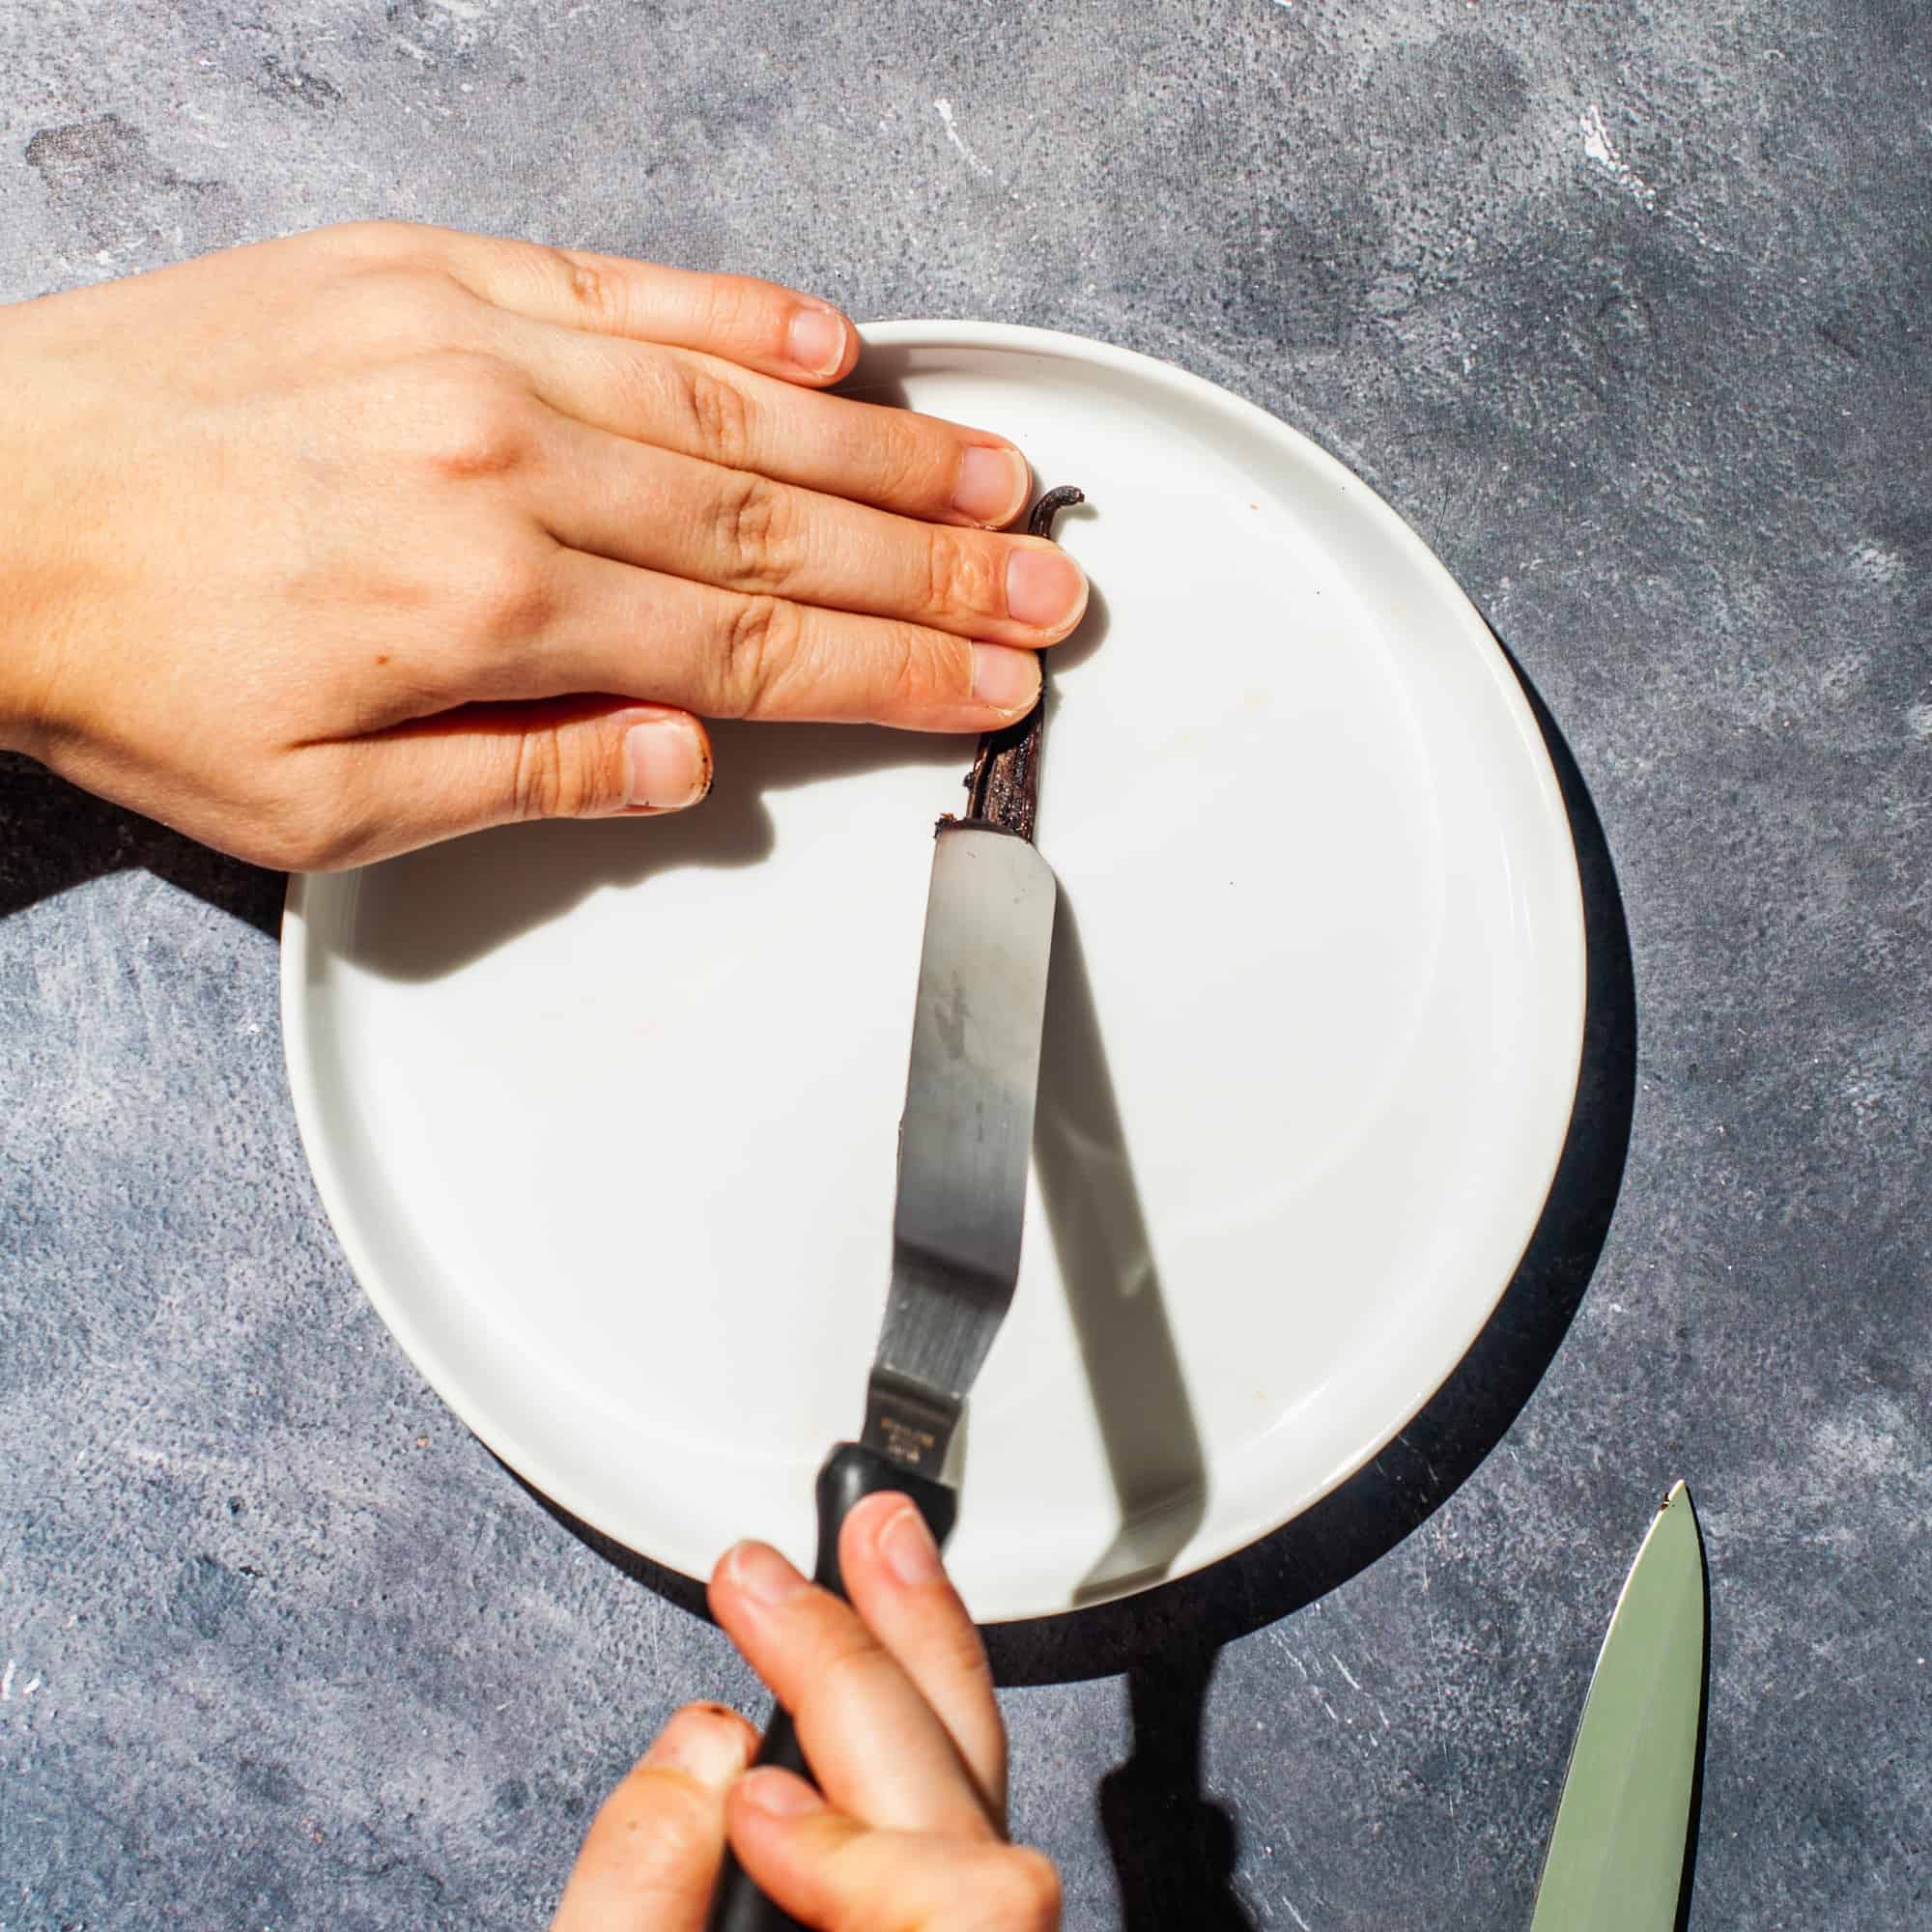 Hands using an offset spatula to scrape seeds from the inside of a vanilla bean